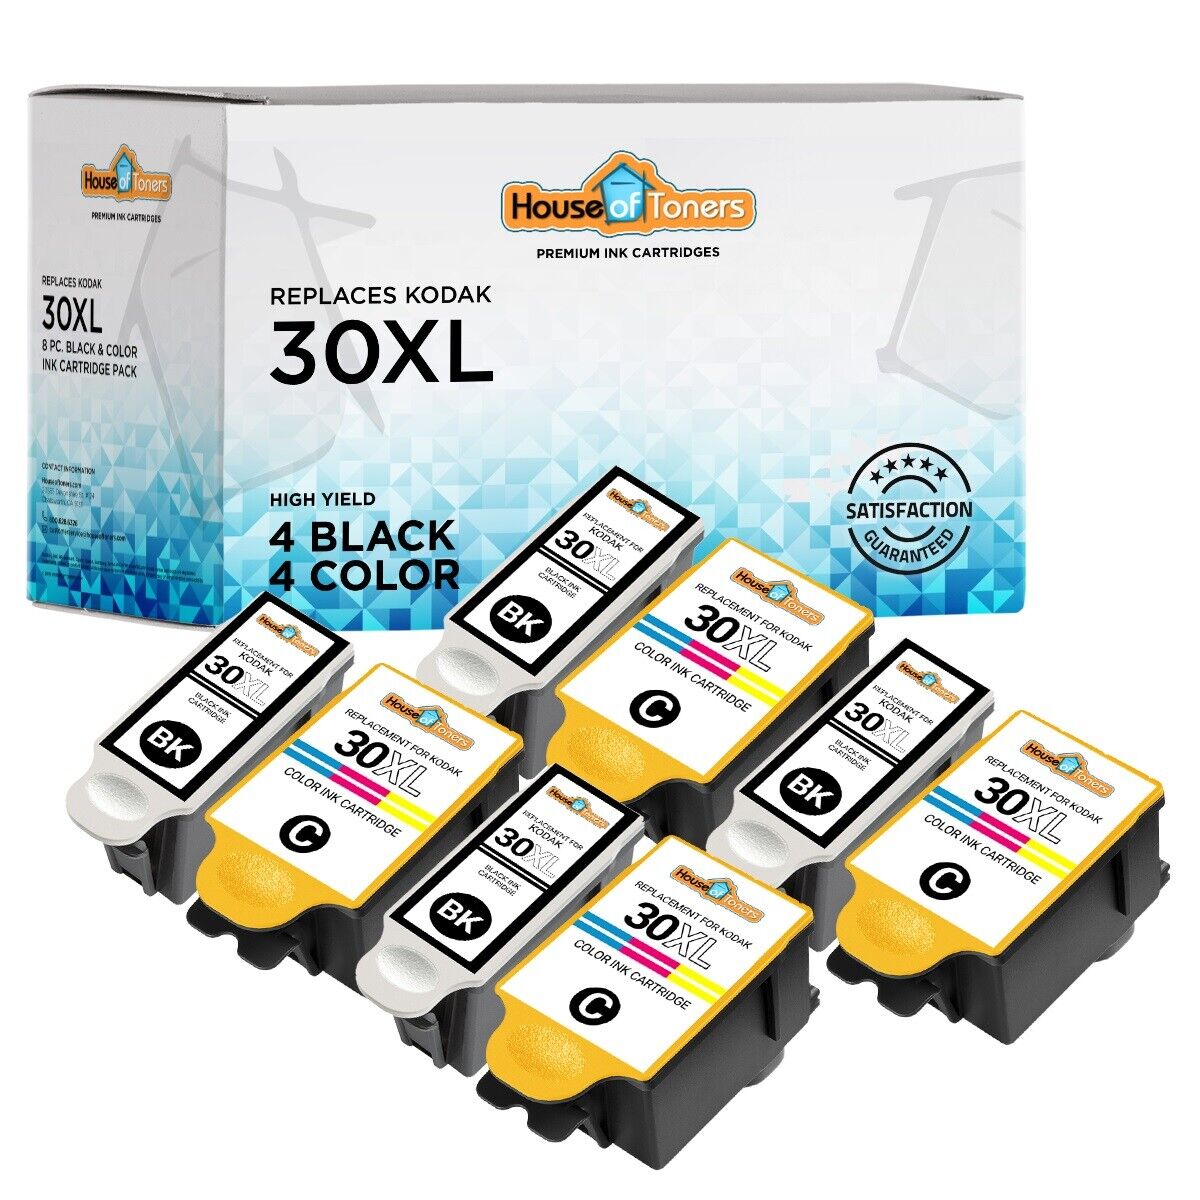 8pk 30XL Ink Cartridges for Kodak ESP Office 2150 ESP Office 2170 Printer